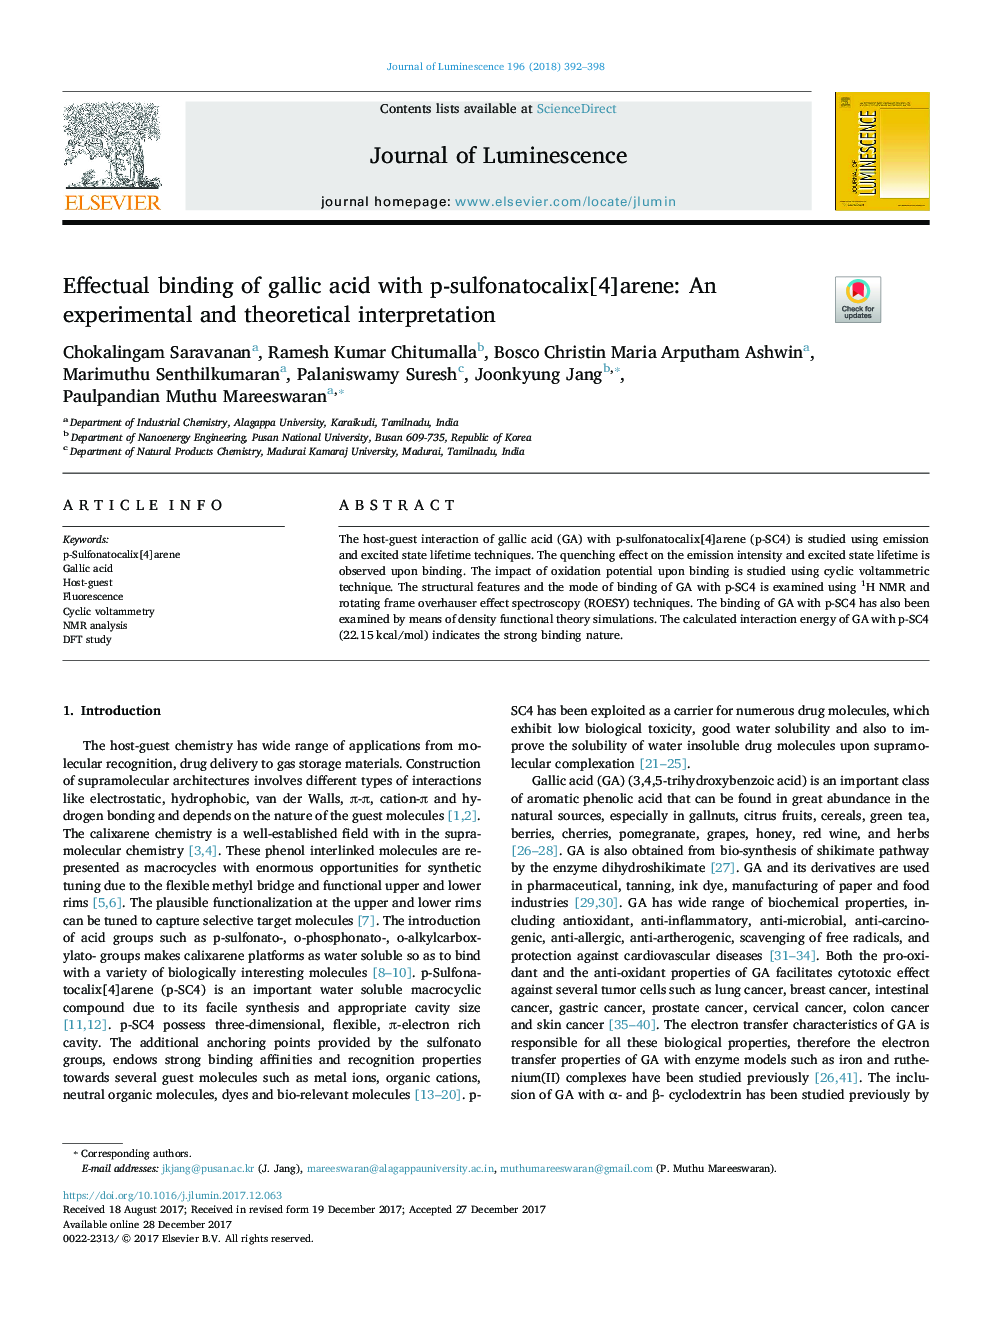 Effectual binding of gallic acid with p-sulfonatocalix[4]arene: An experimental and theoretical interpretation